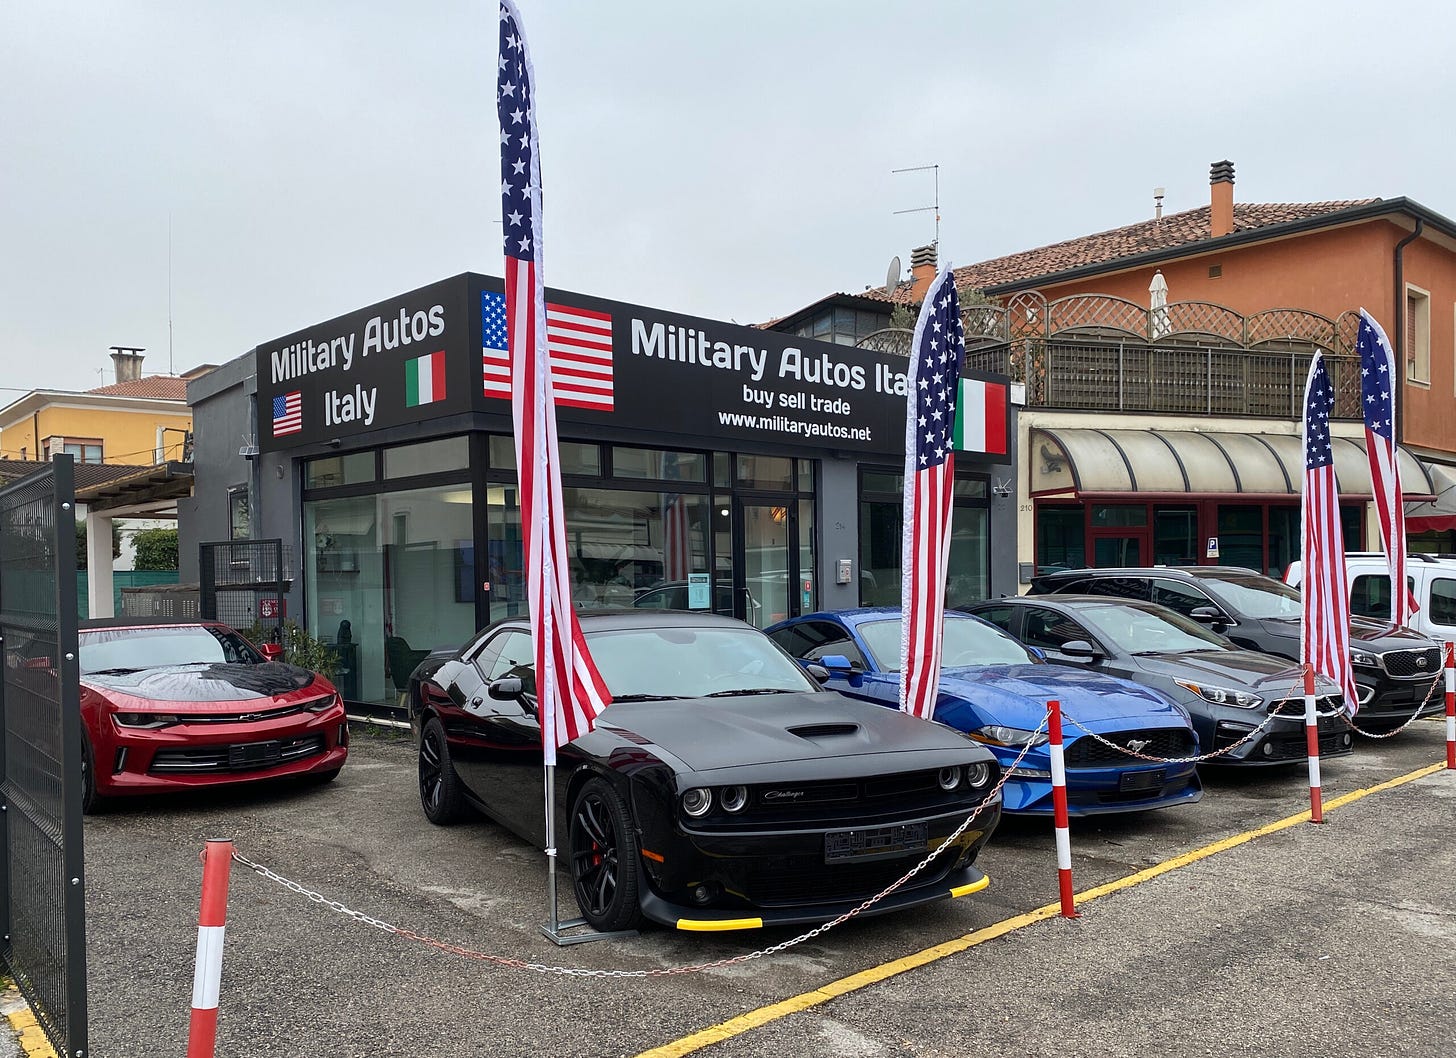 Military Autos Italy